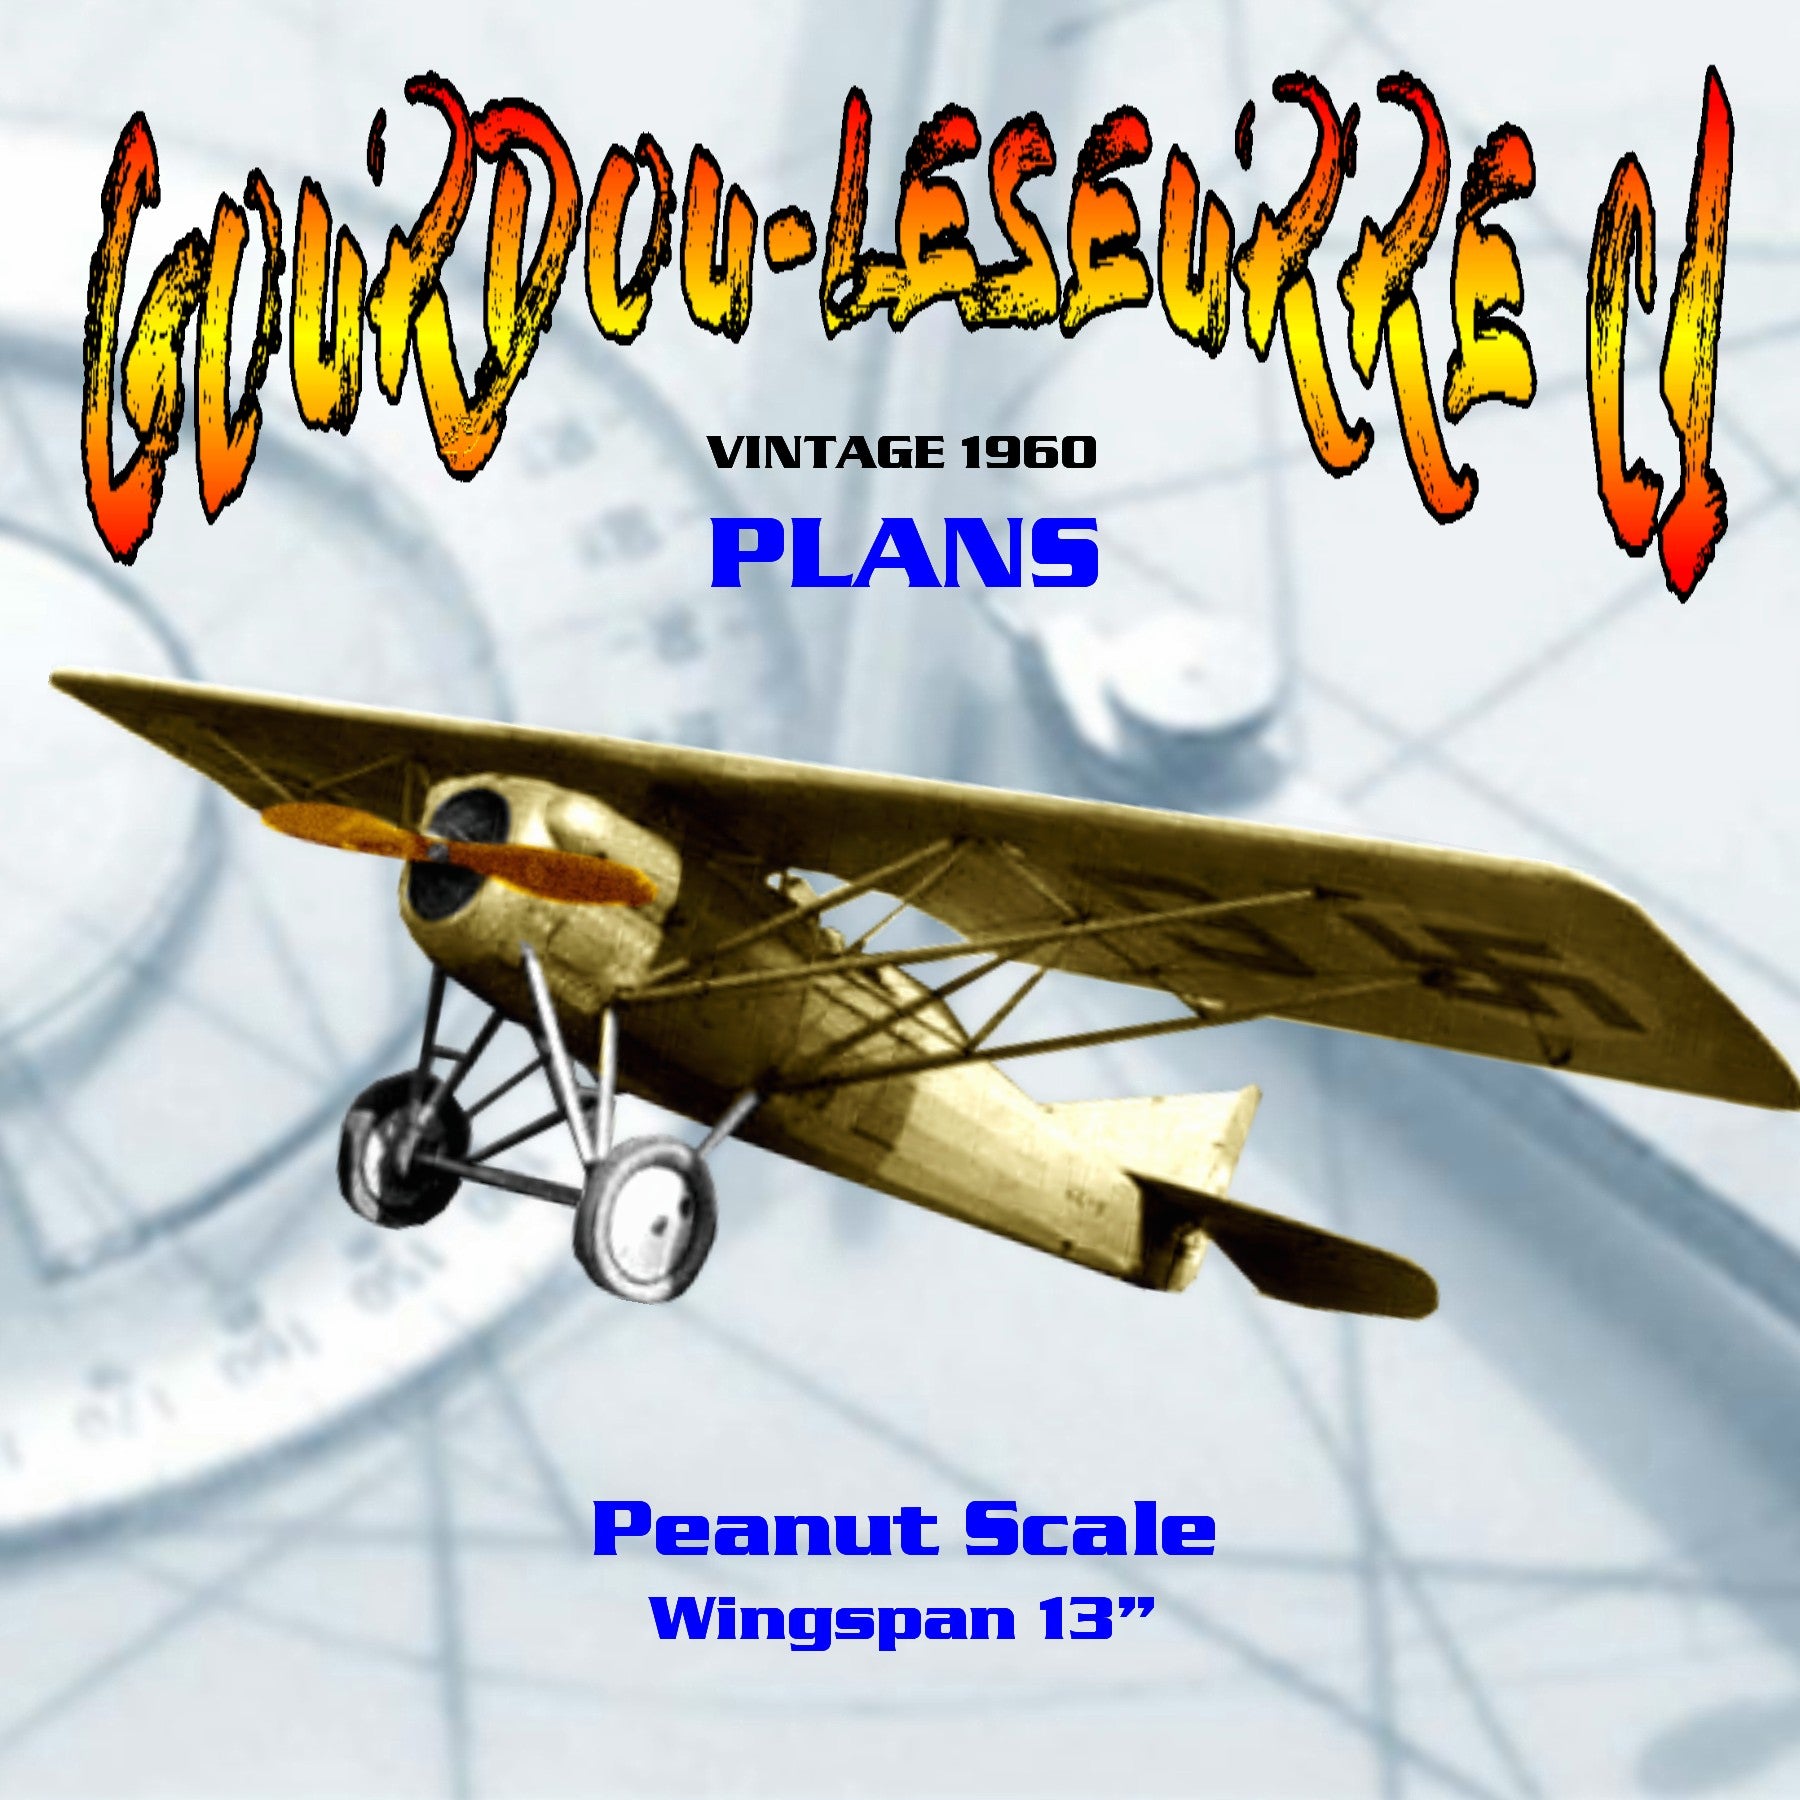 full size printed plans peanut scale "gourdou-leseurre c1"  excellent modeling subject.